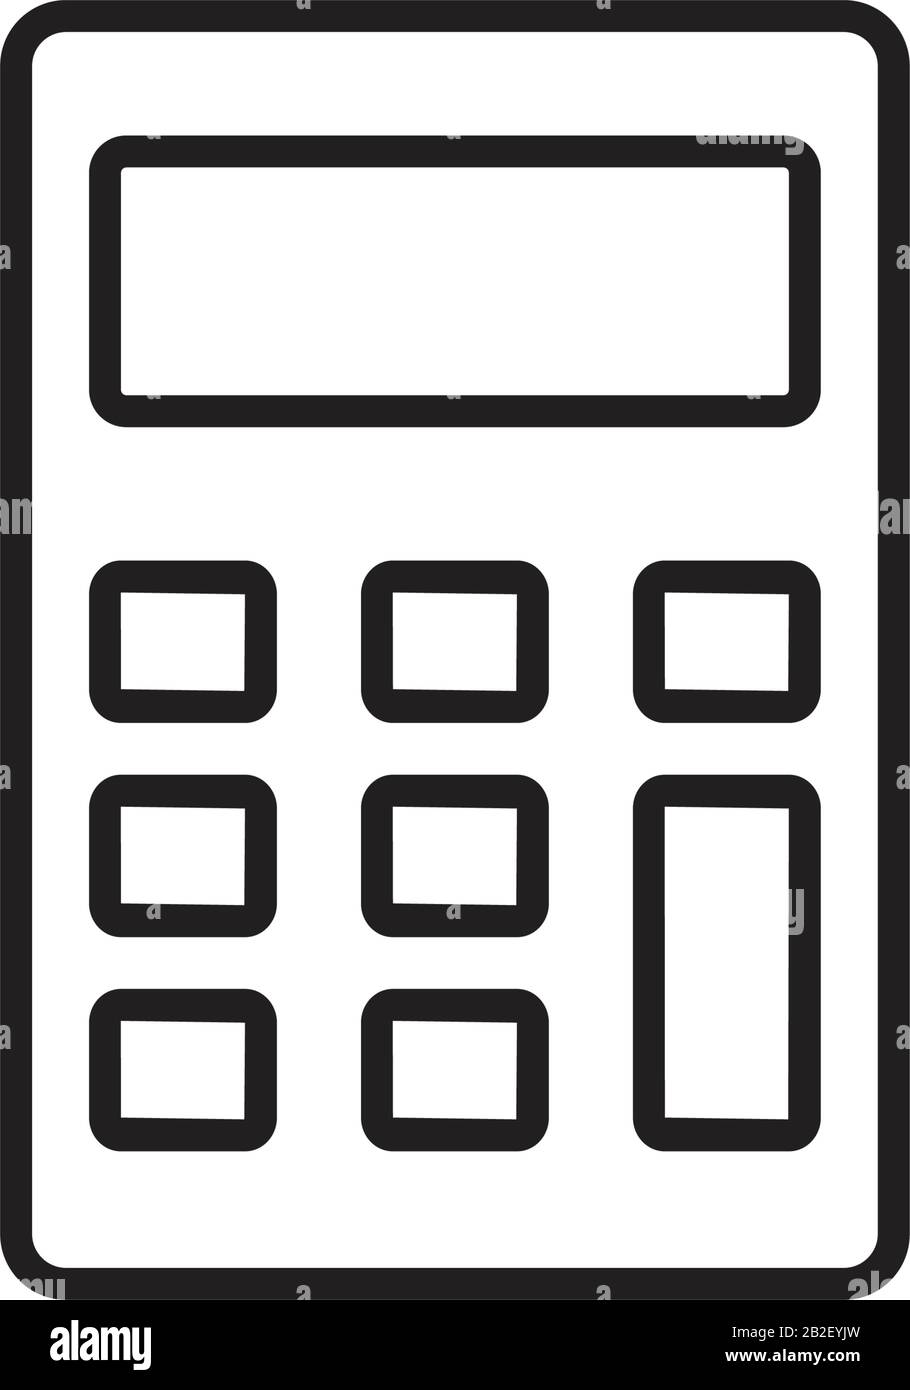 Calculator icon -Fotos und -Bildmaterial in hoher Auflösung – Alamy